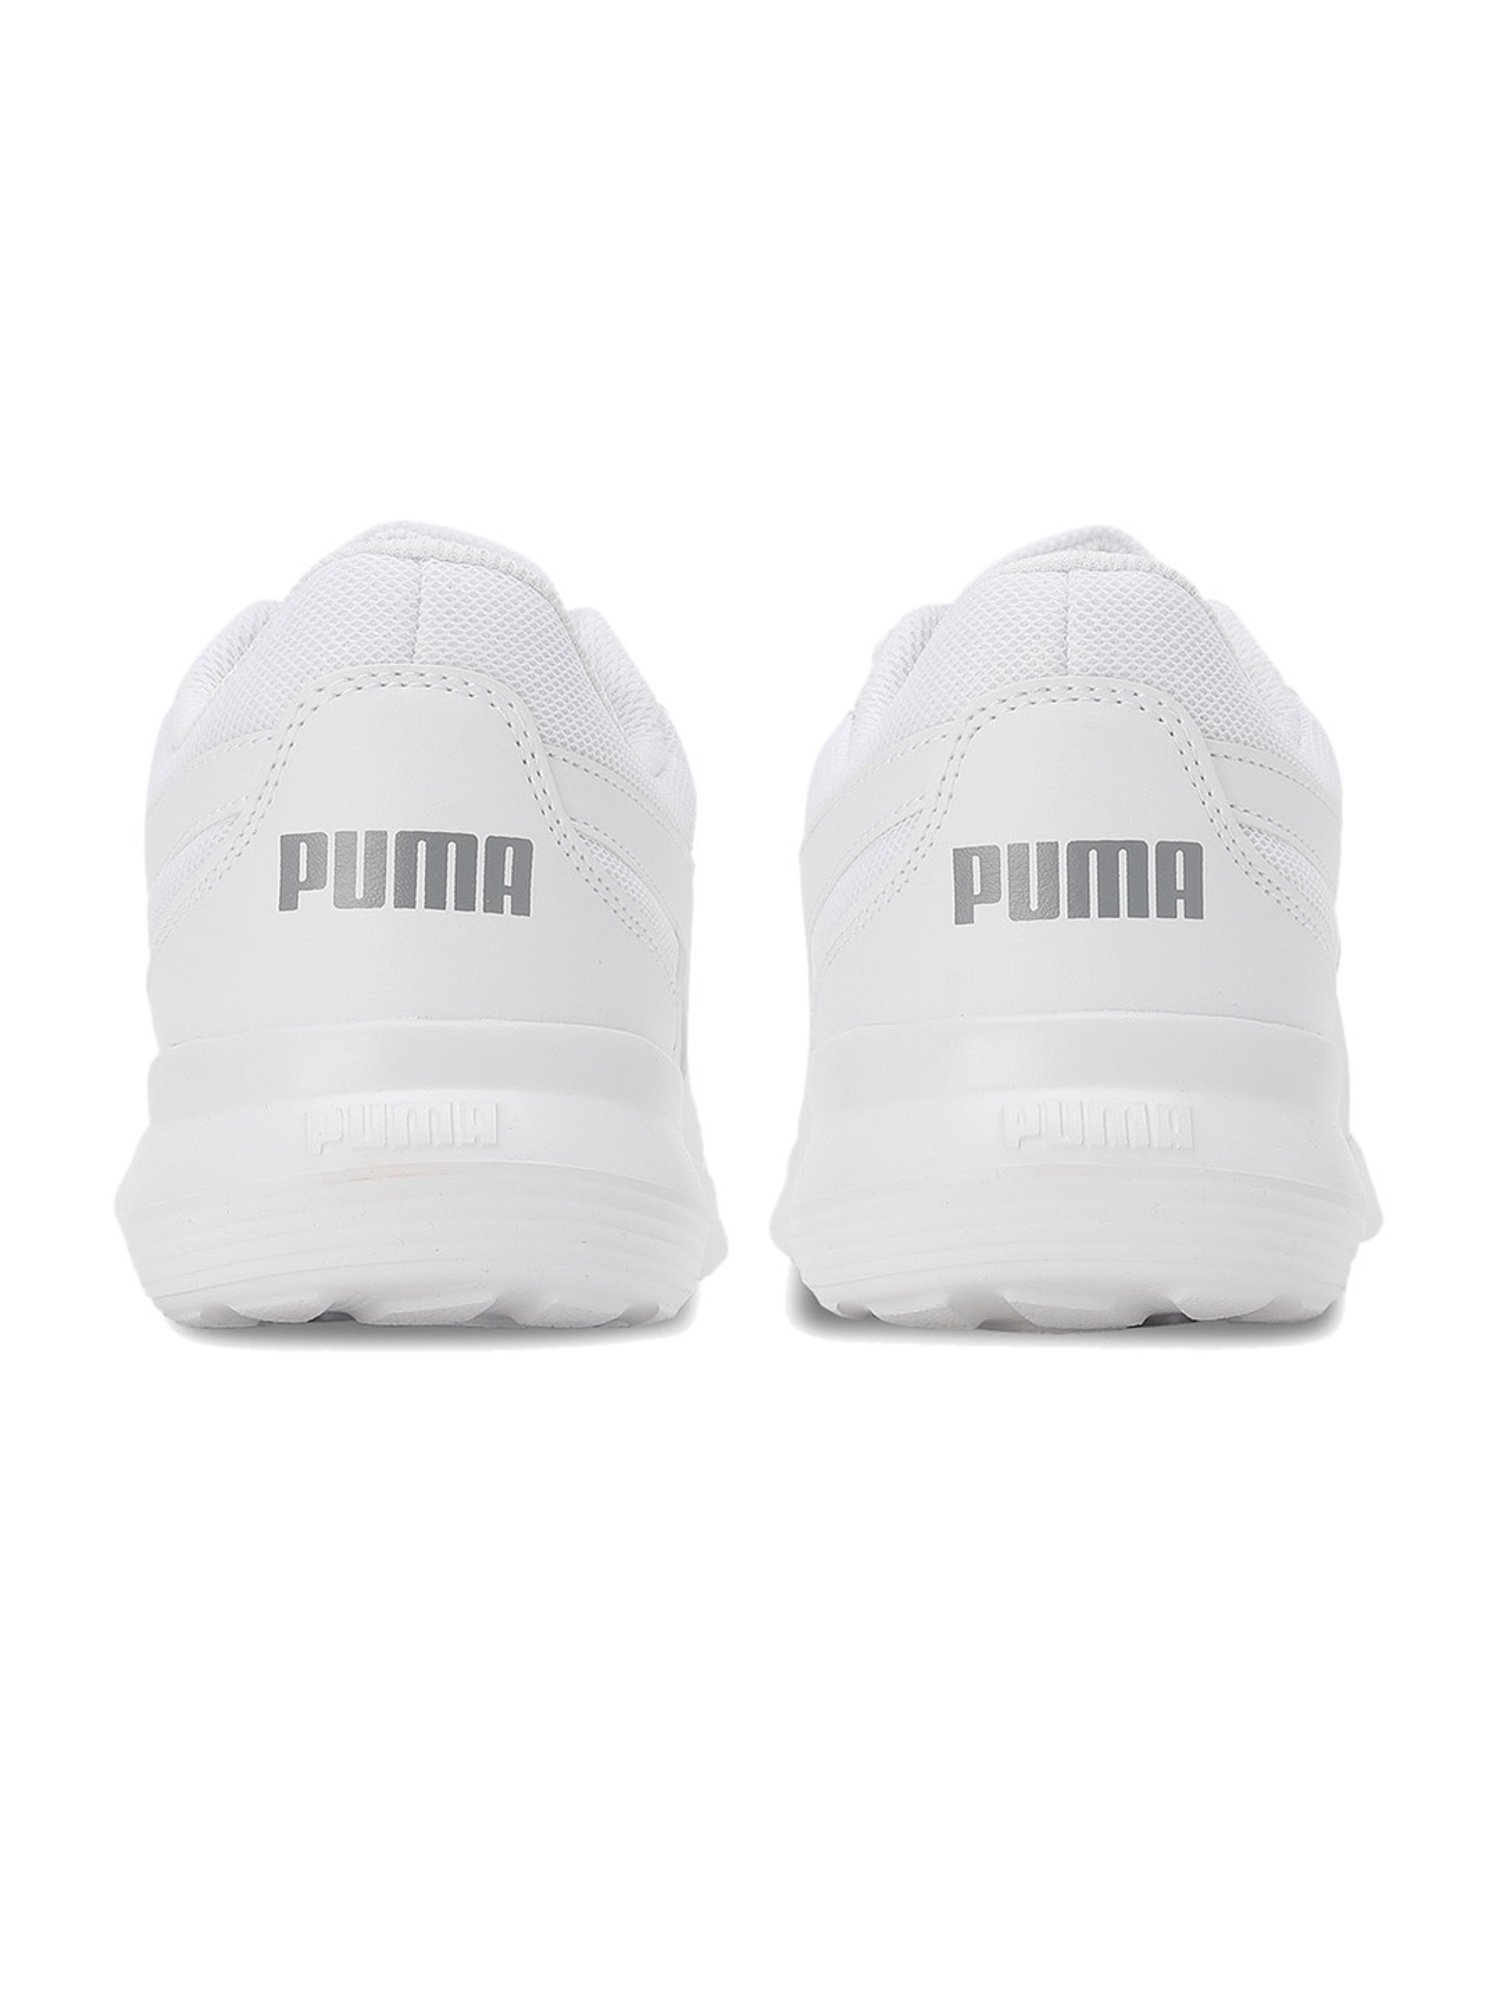 PUMA x F1® CA Pro Men's Sneakers | PUMA